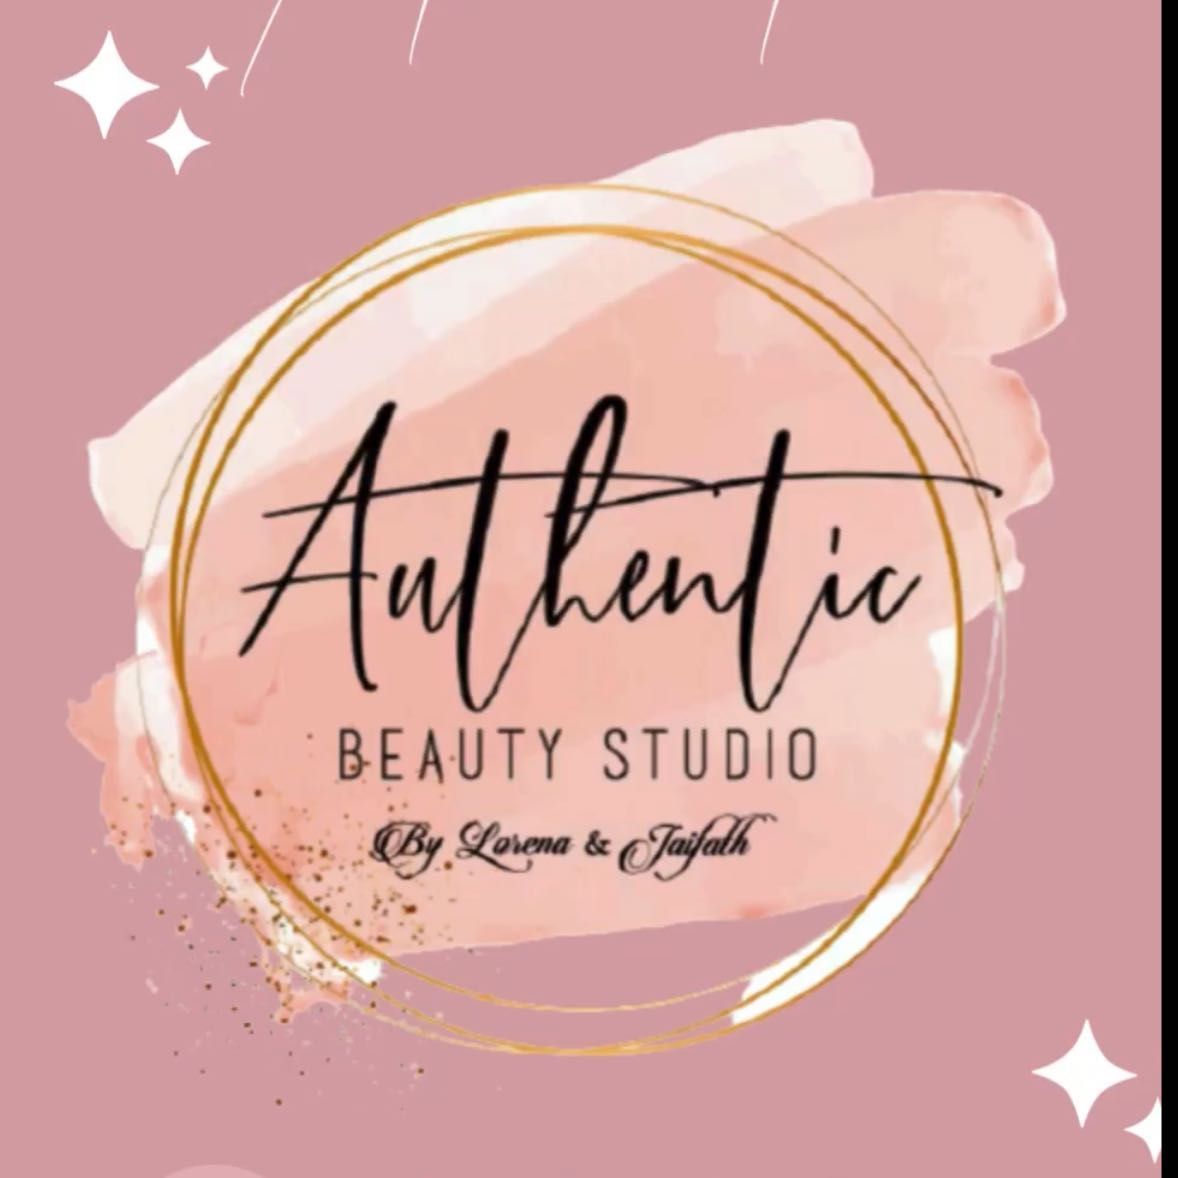 Authentic Beauty Studio By Lorena & Jaifath, 1650 Sand Lake Rd, Suite 235 piso 2, Orlando, 32809